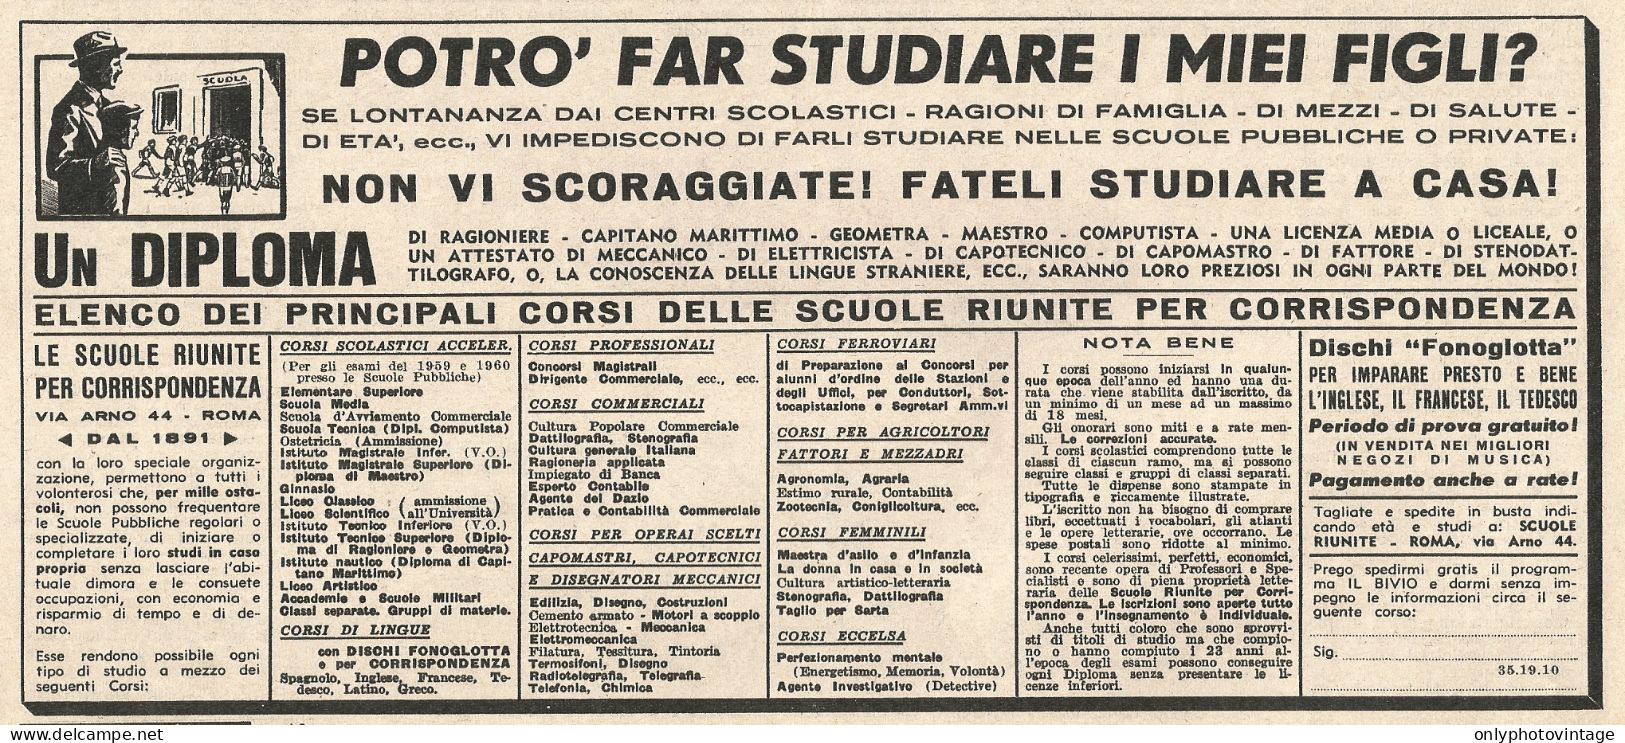 Scuole Riunite Per Corrispondenza - Pubblicit� Del 1958 - Vintage Ad - Advertising